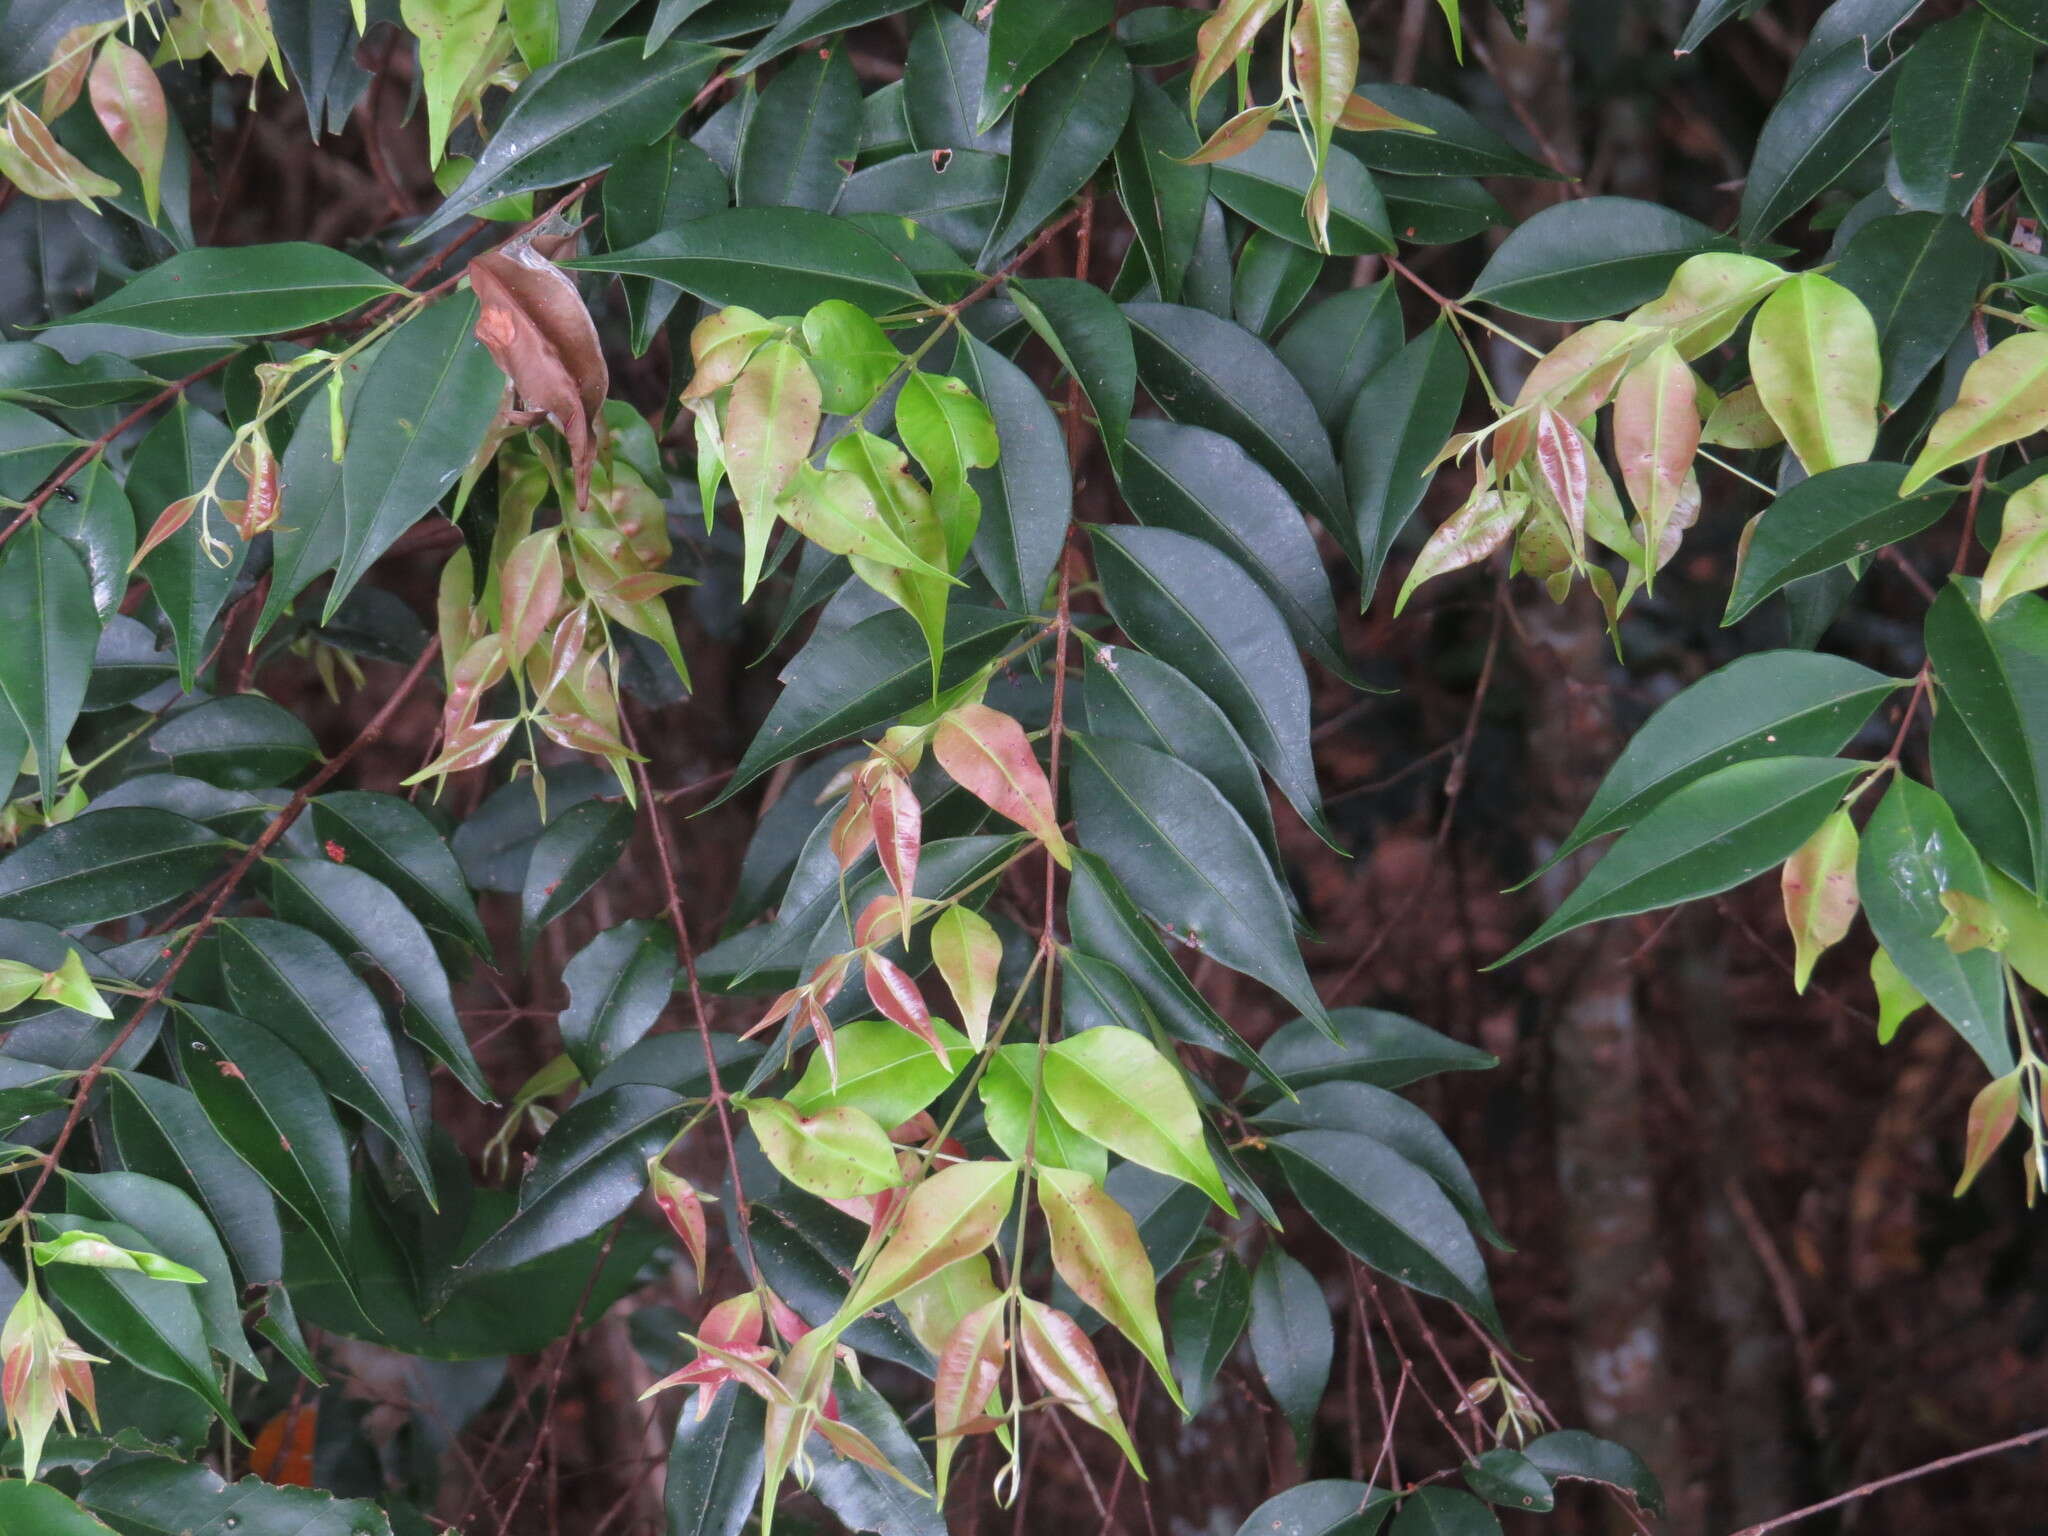 Sivun Decaspermum humile (G. Don) A. J. Scott kuva